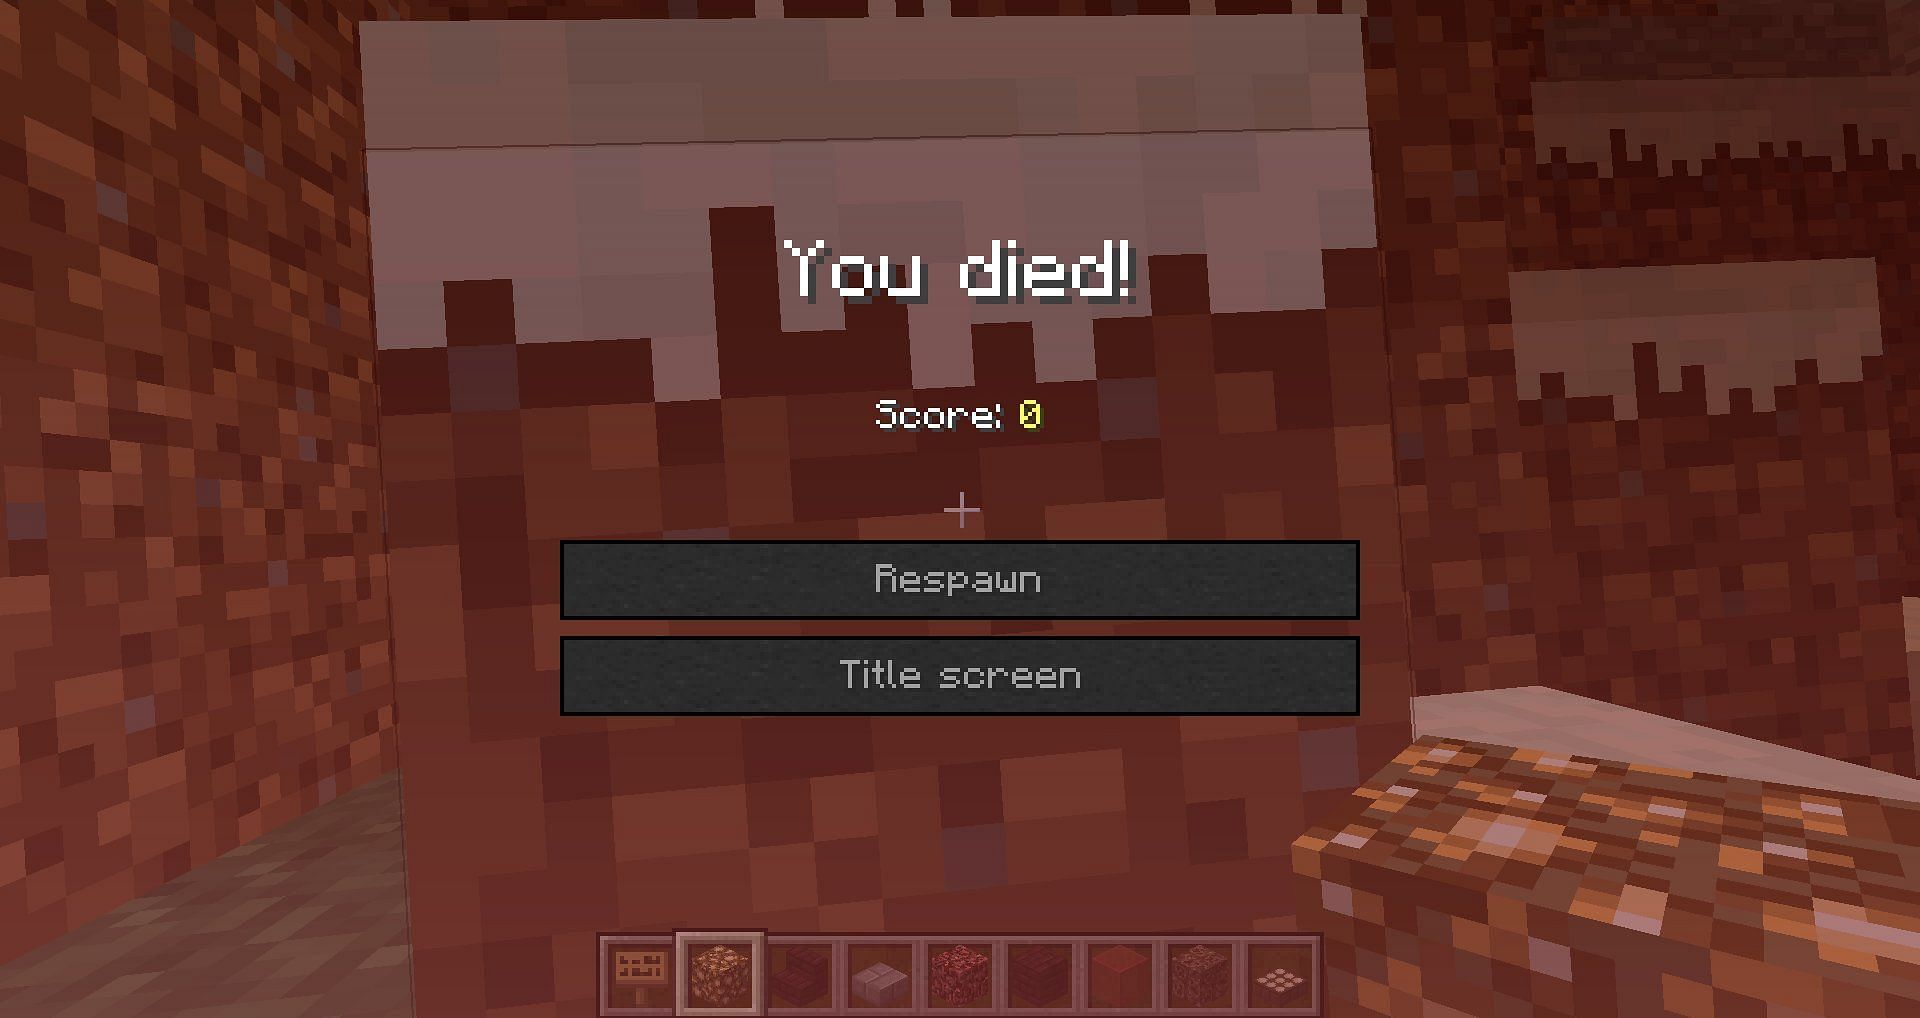 PAIN - The Minecraft death screen (Image via Minecraft)